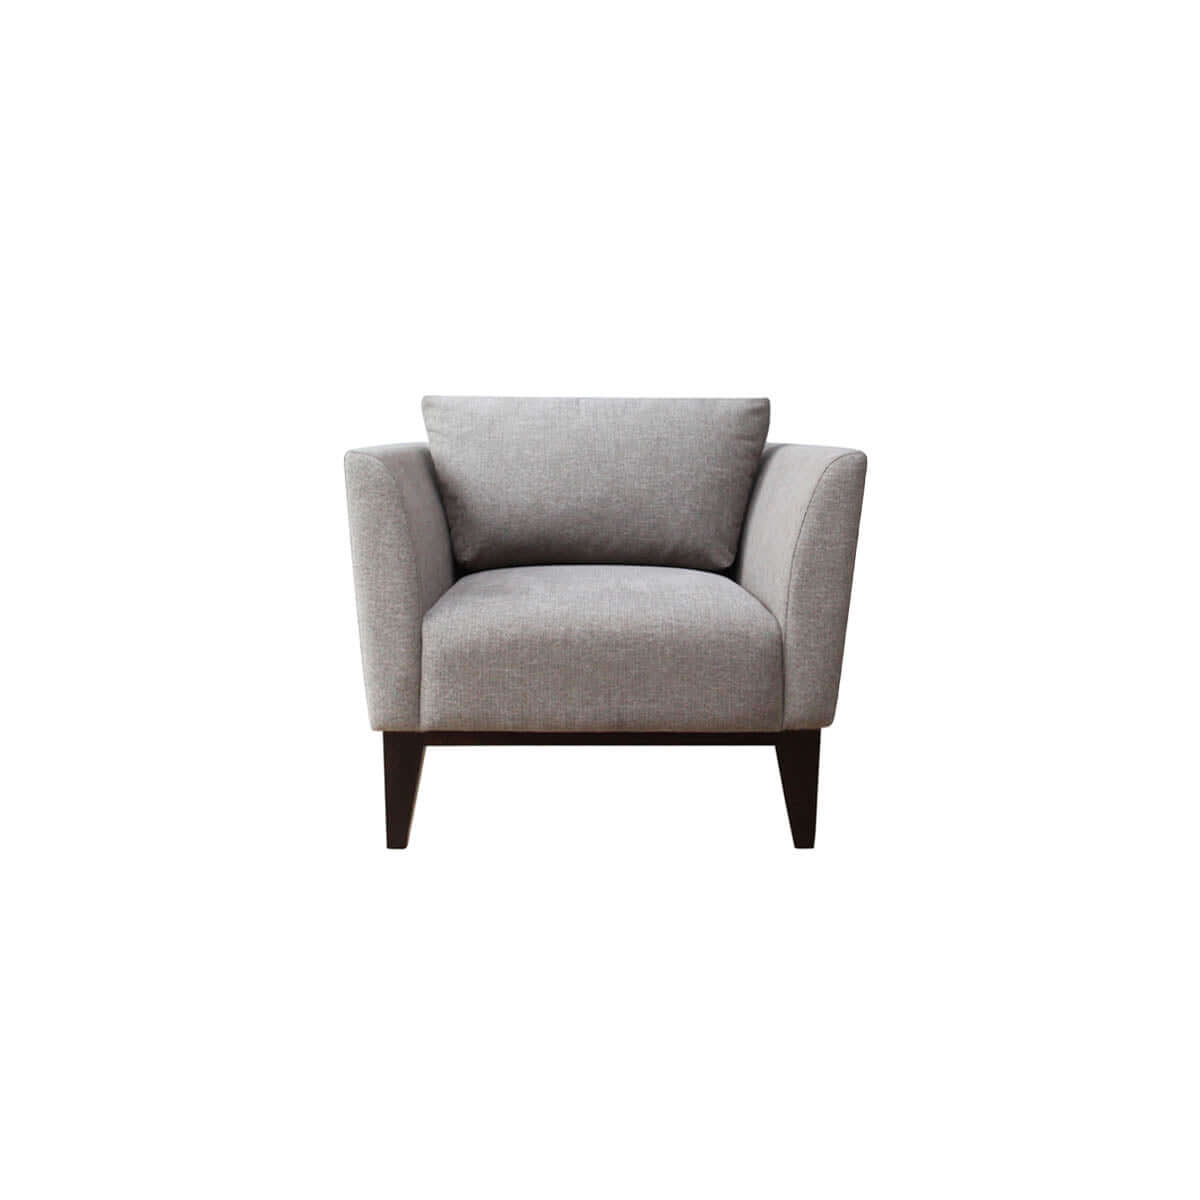 Soho Sofa 1 Seat Online Furniture